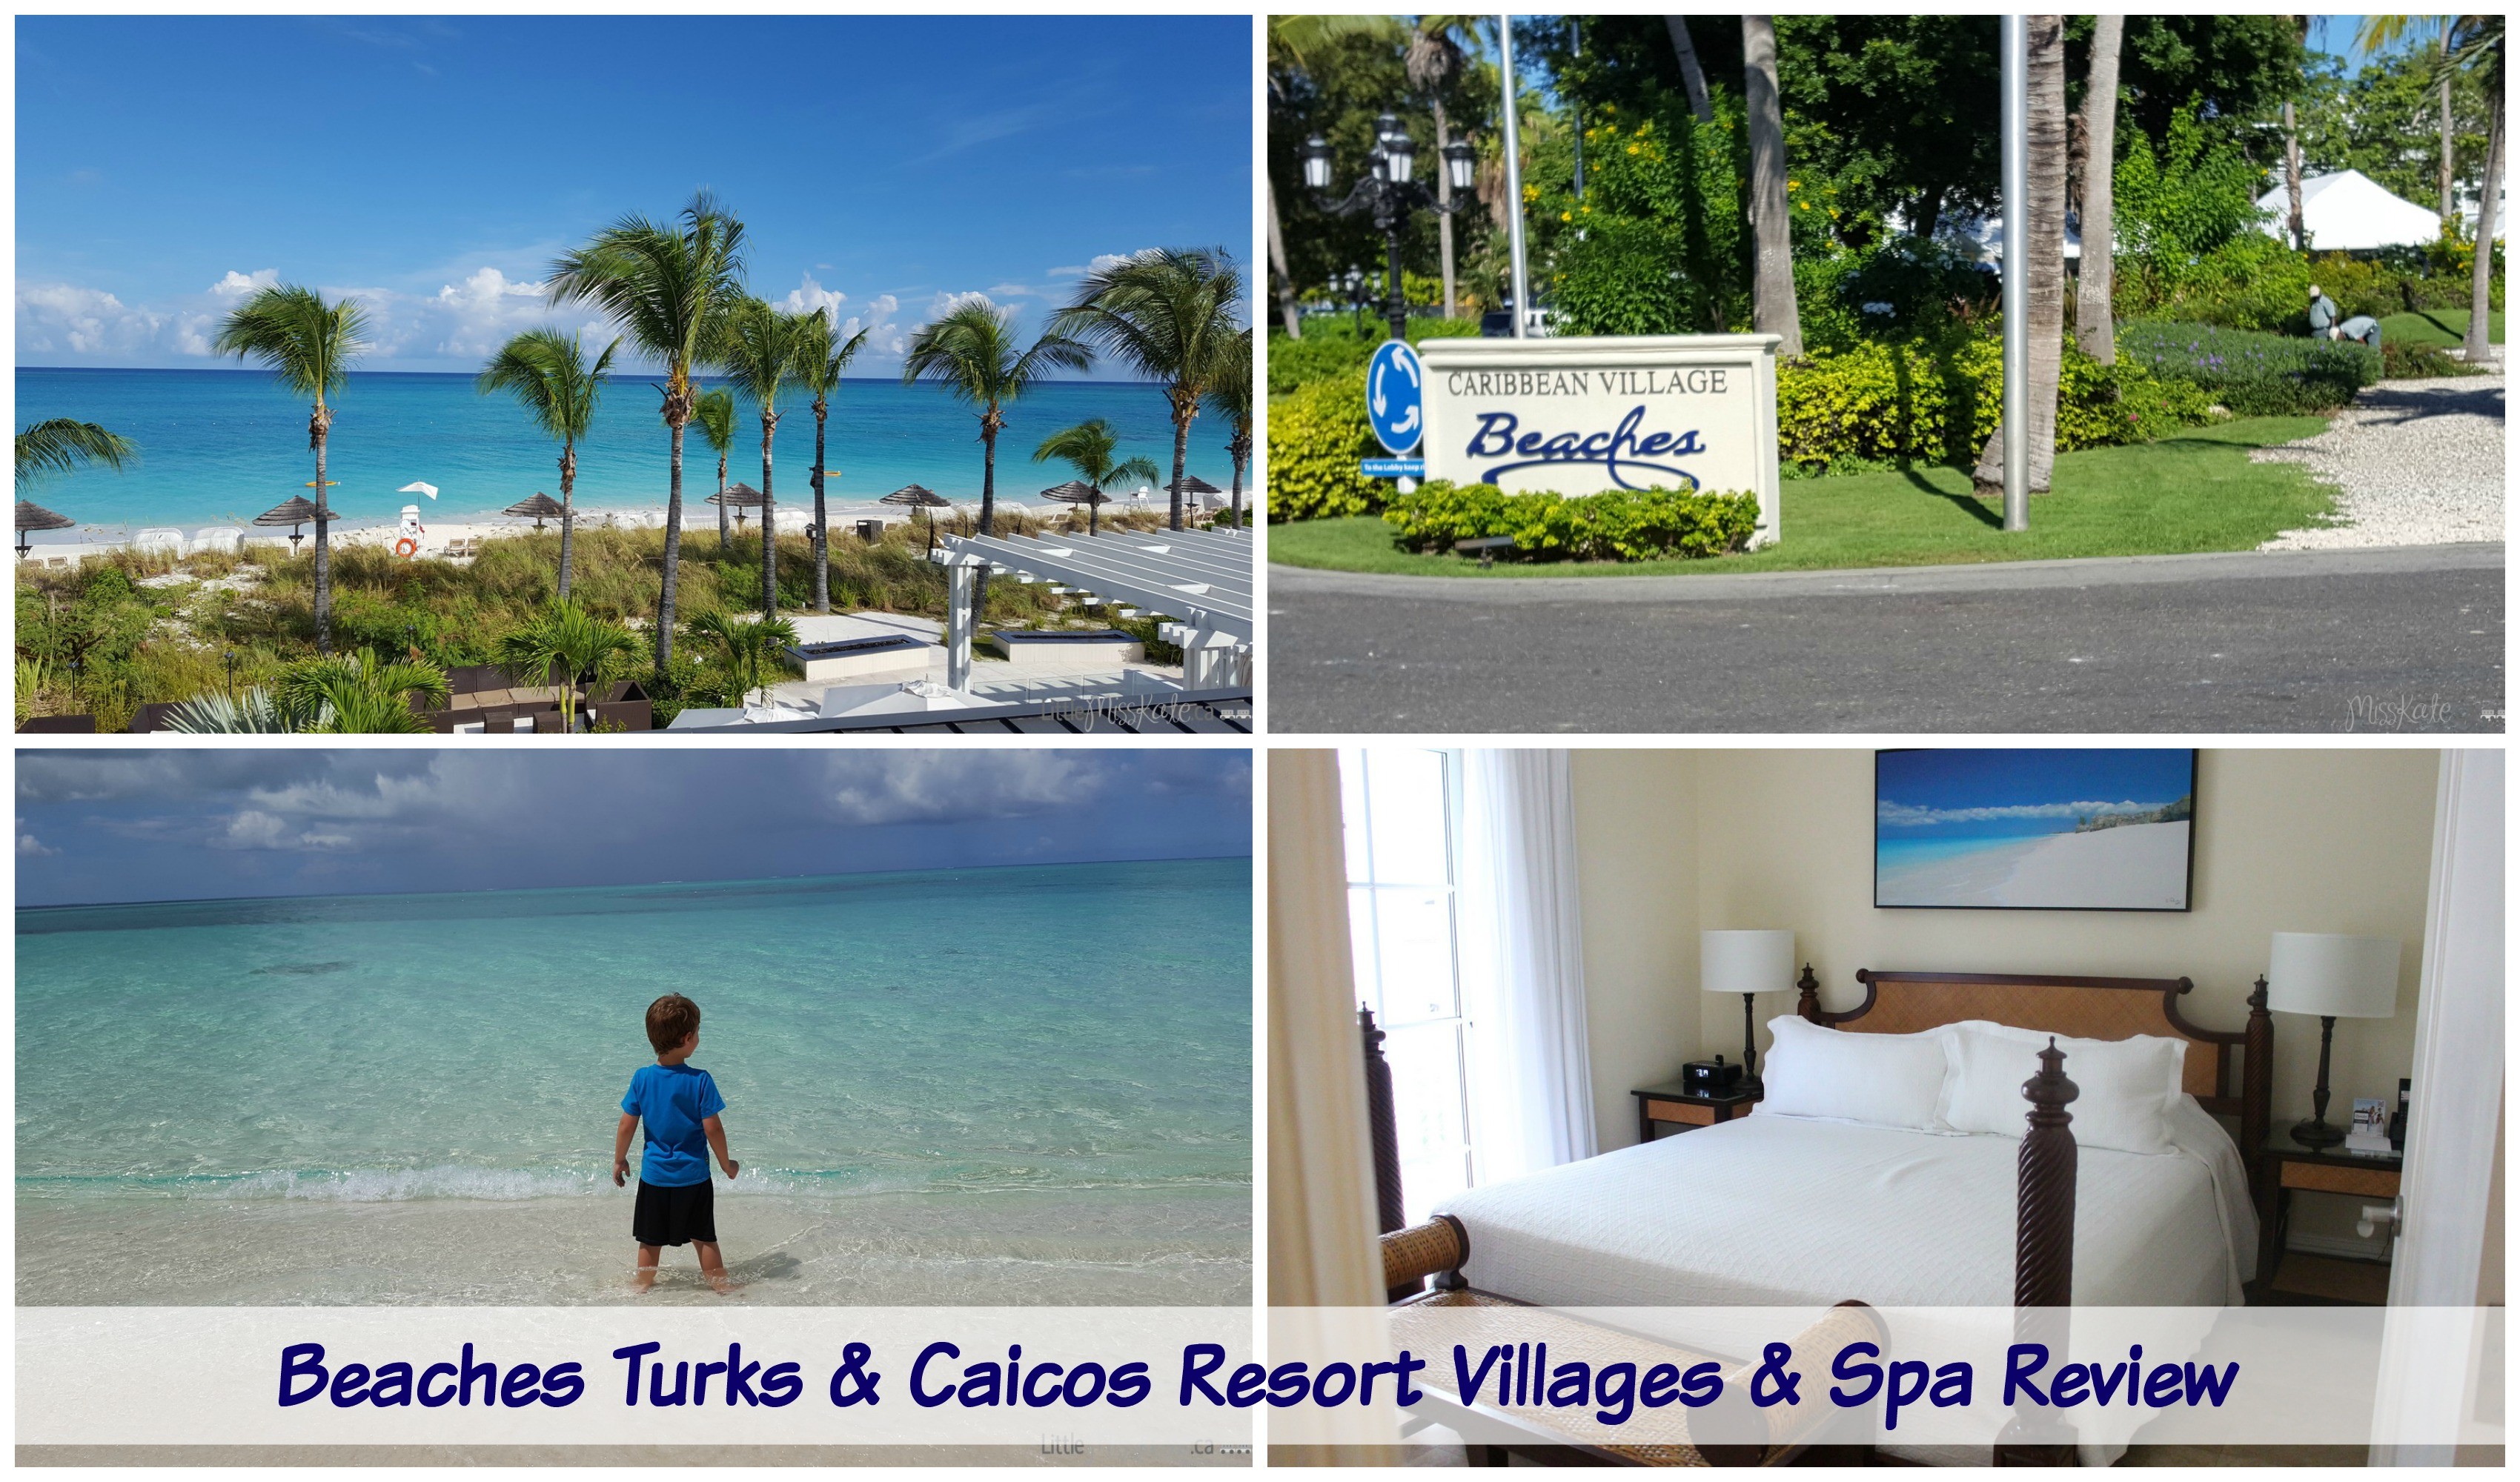 Beaches Turks & Caicos Resort Villages & Spa plete Review Little Miss Kate